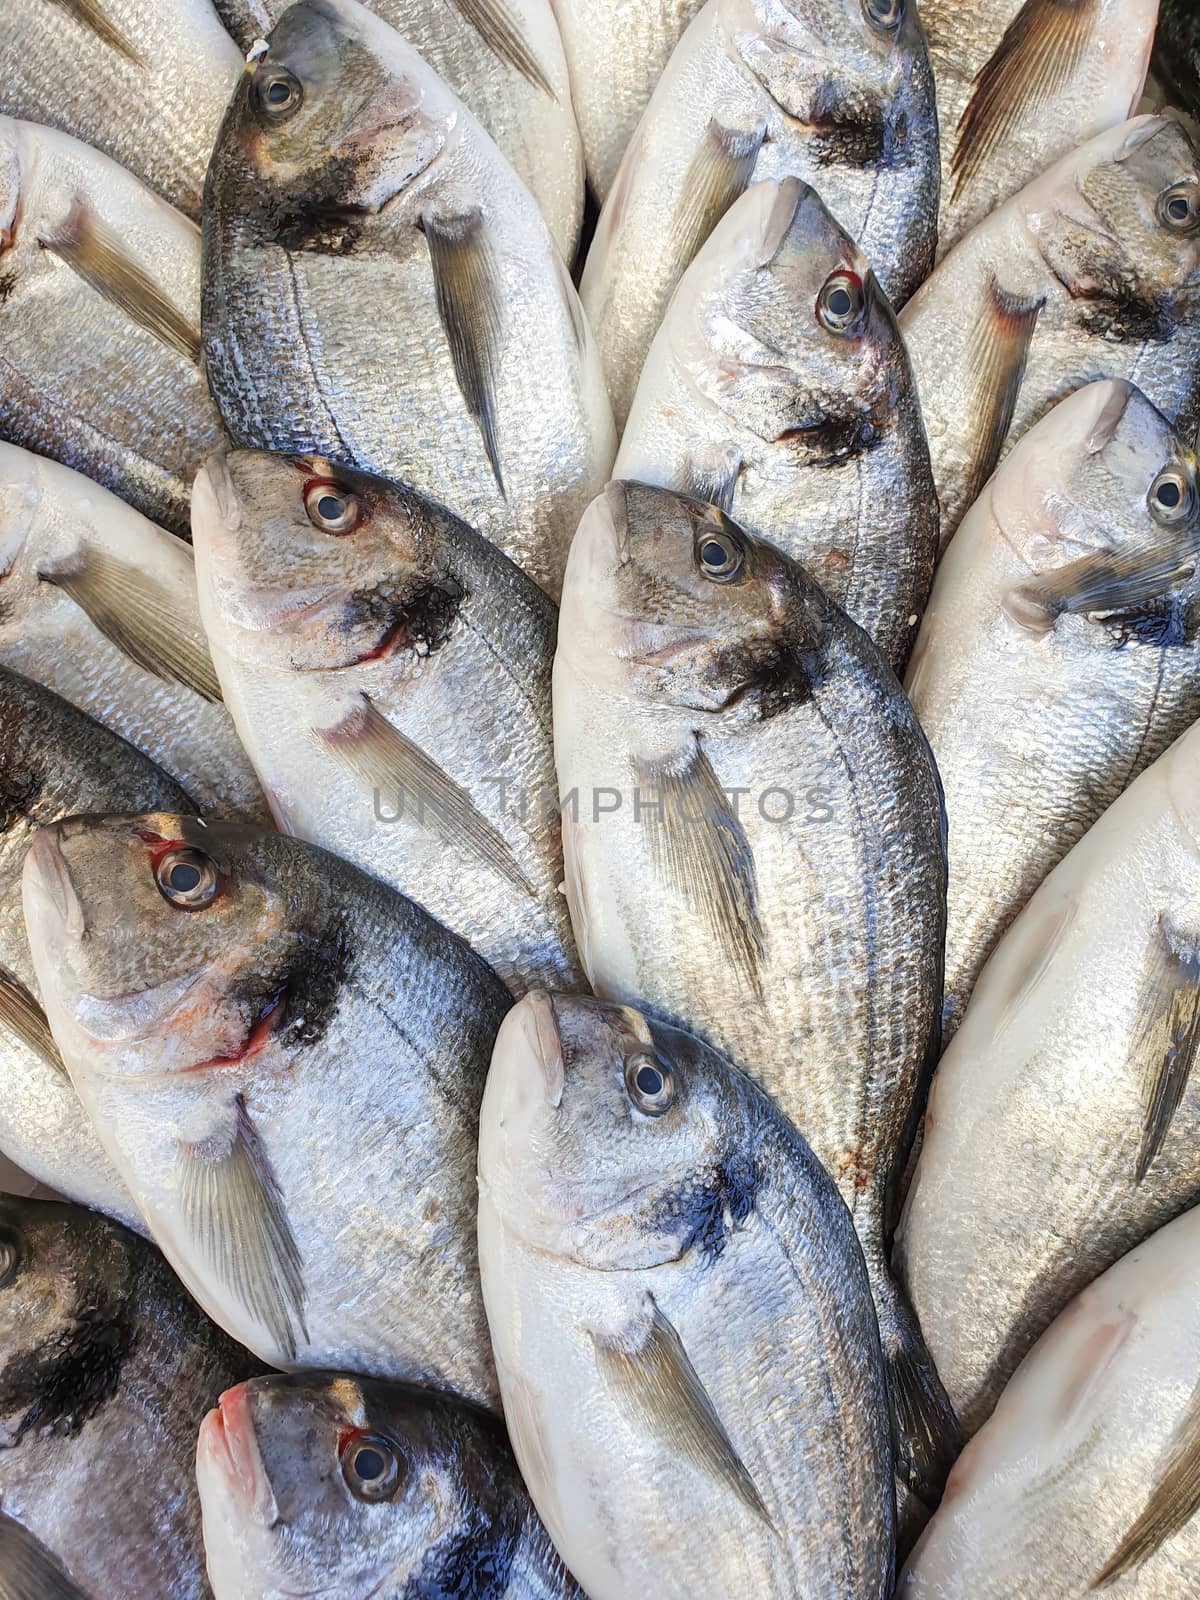 Bream fish on ice at market by Robertobinetti70